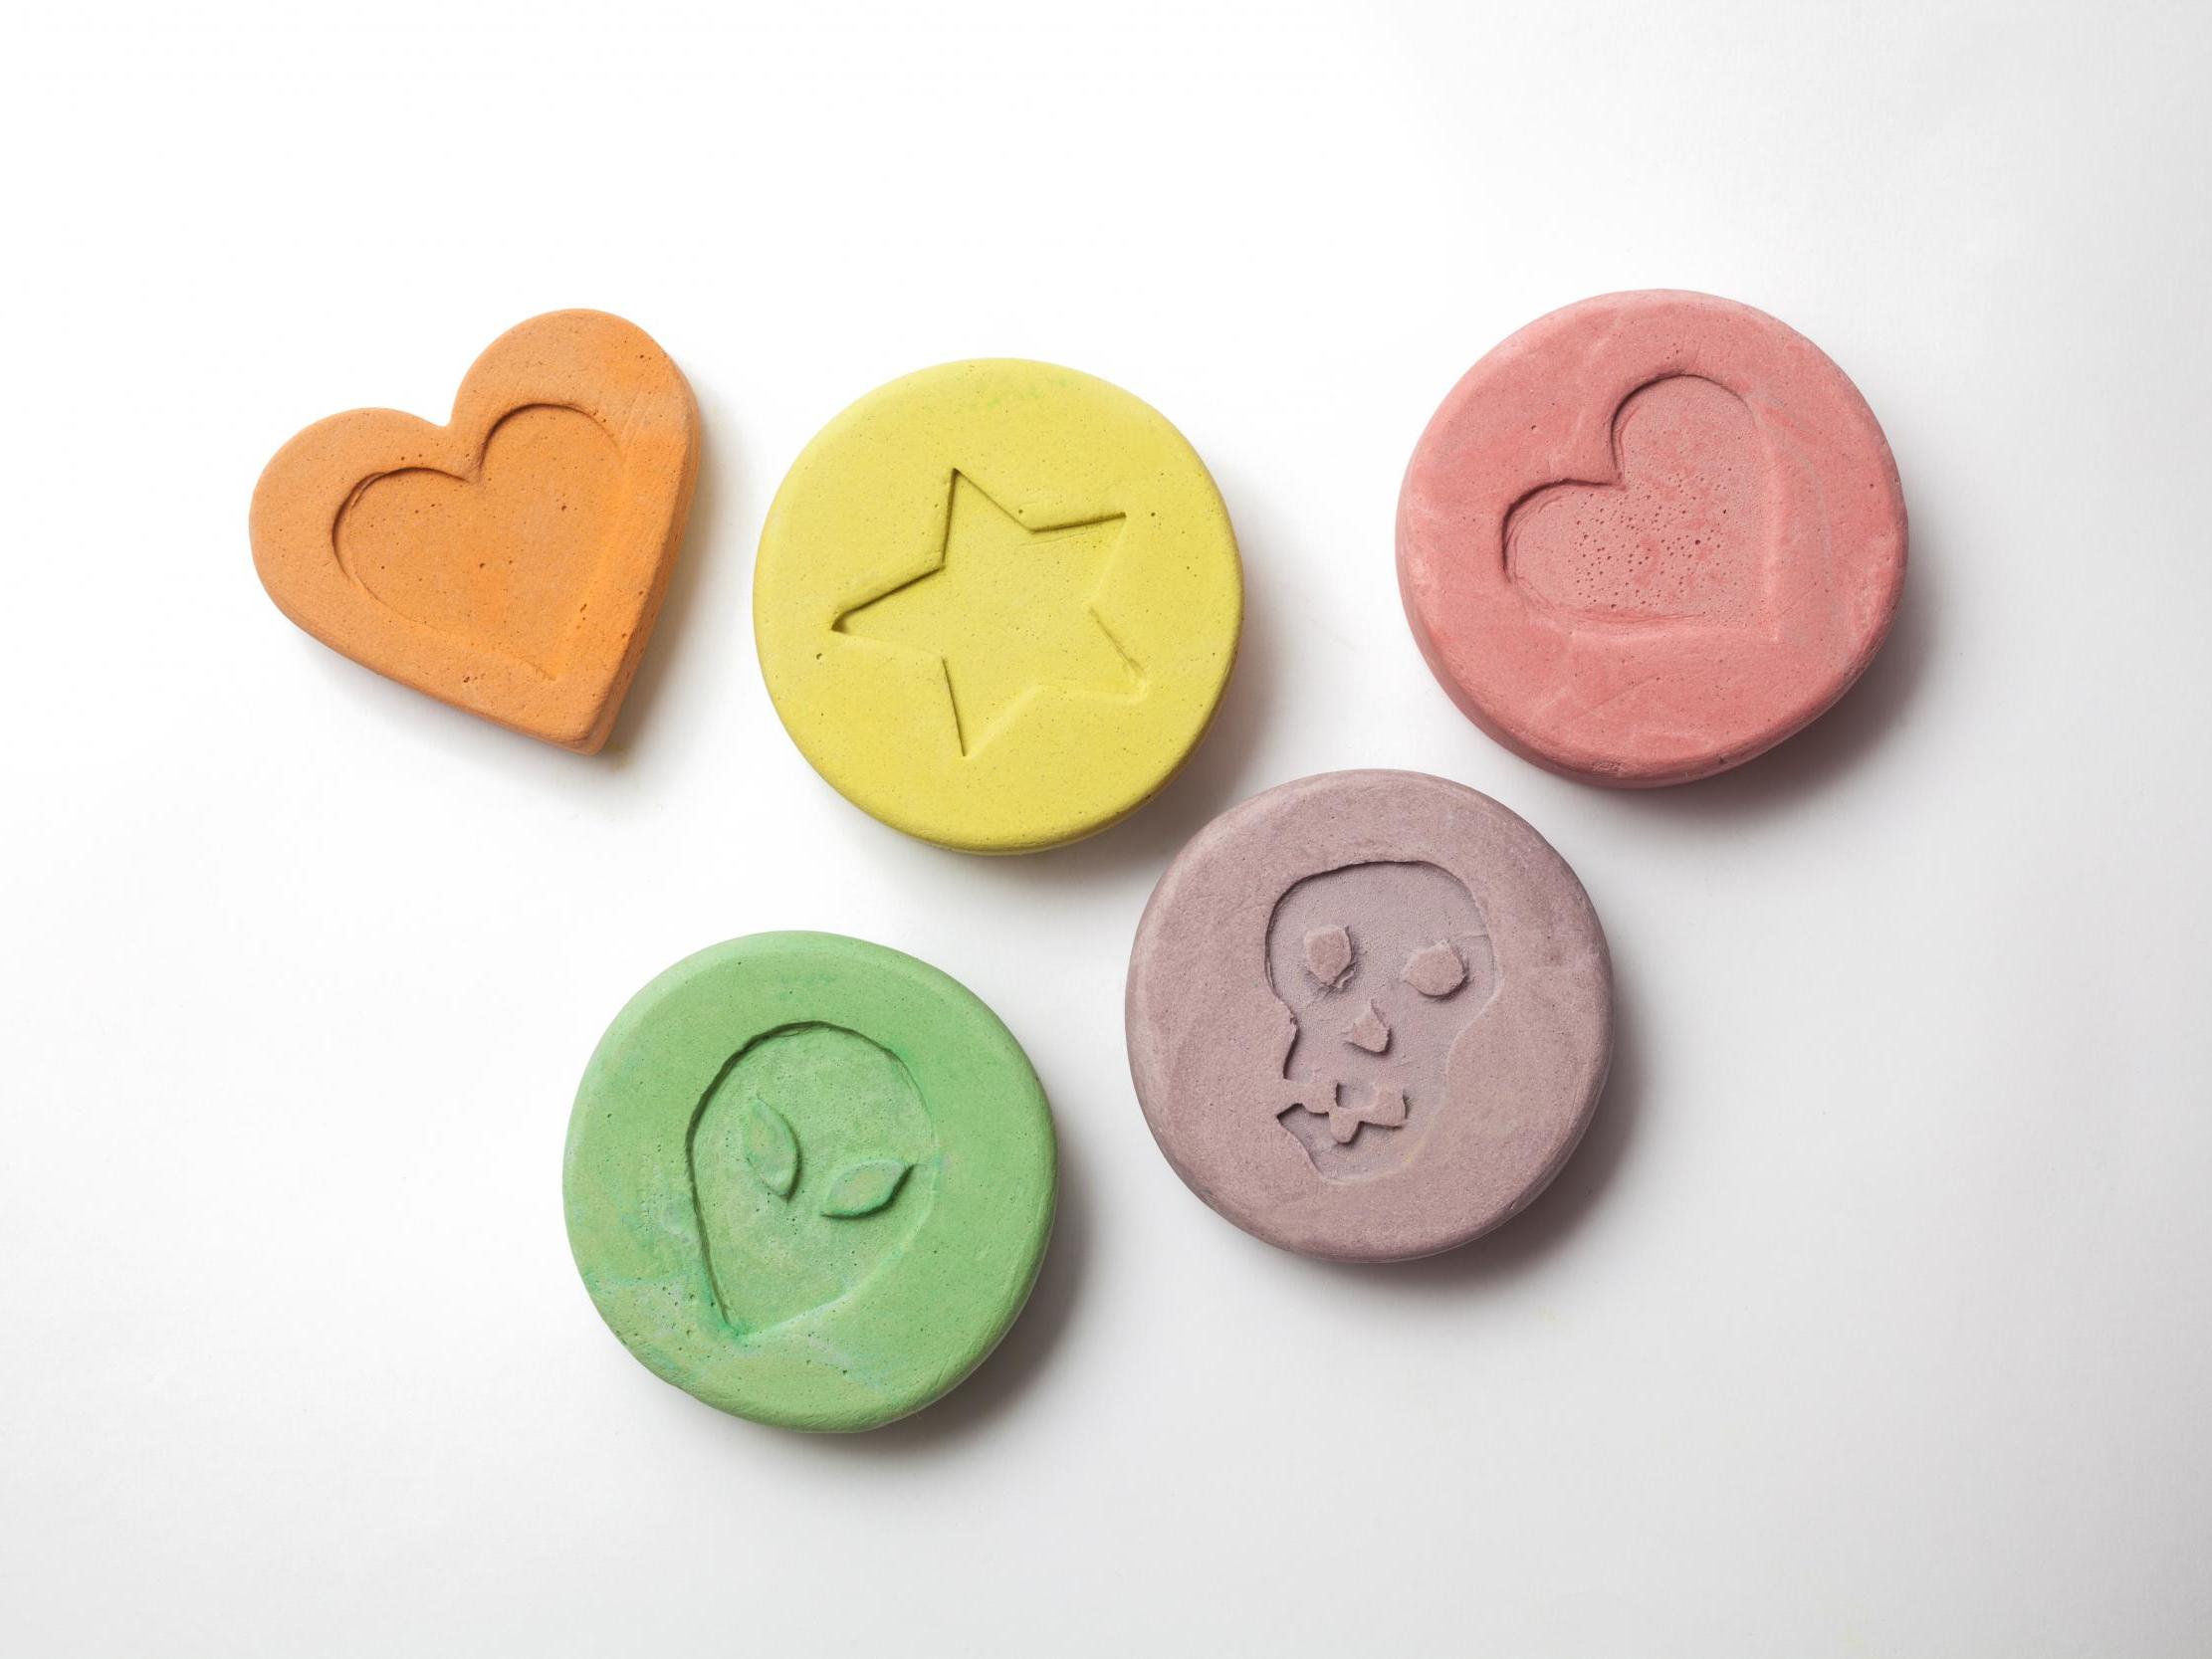 File image of ecstasy pills.